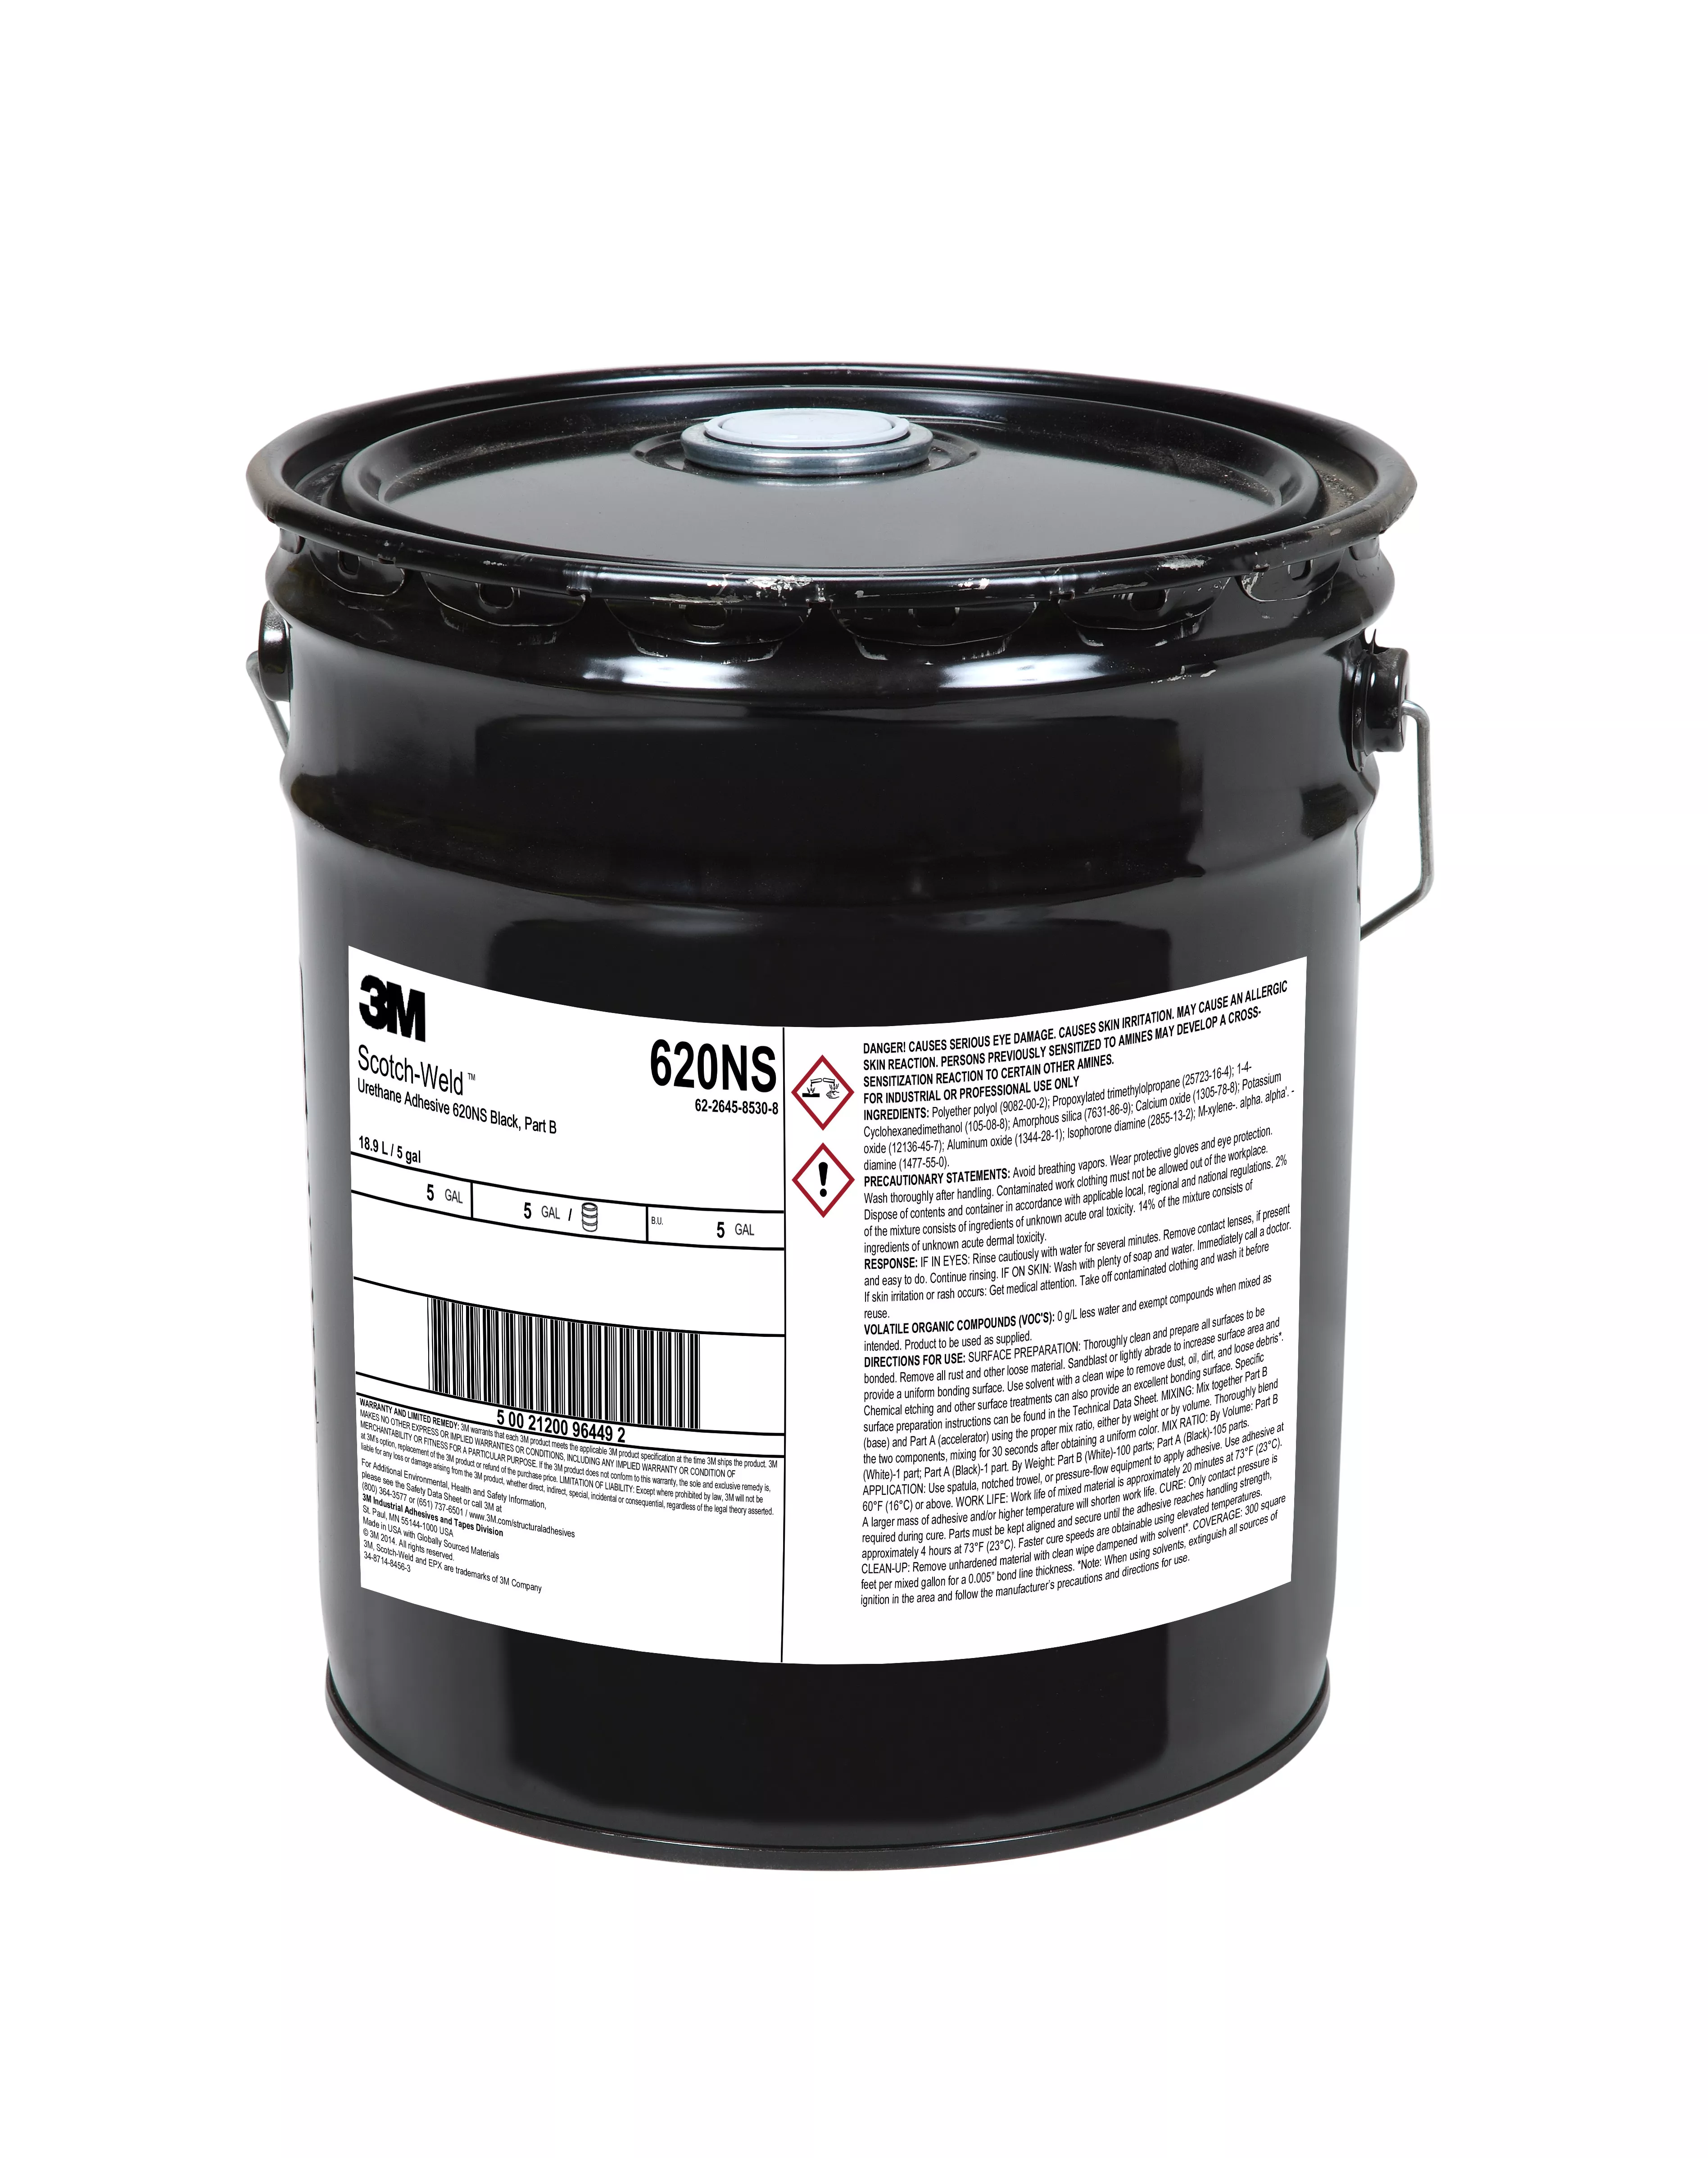 3M™ Scotch-Weld™ Urethane Adhesive 620NS, Black, Part B, 5 Gallon
(Pail), Drum